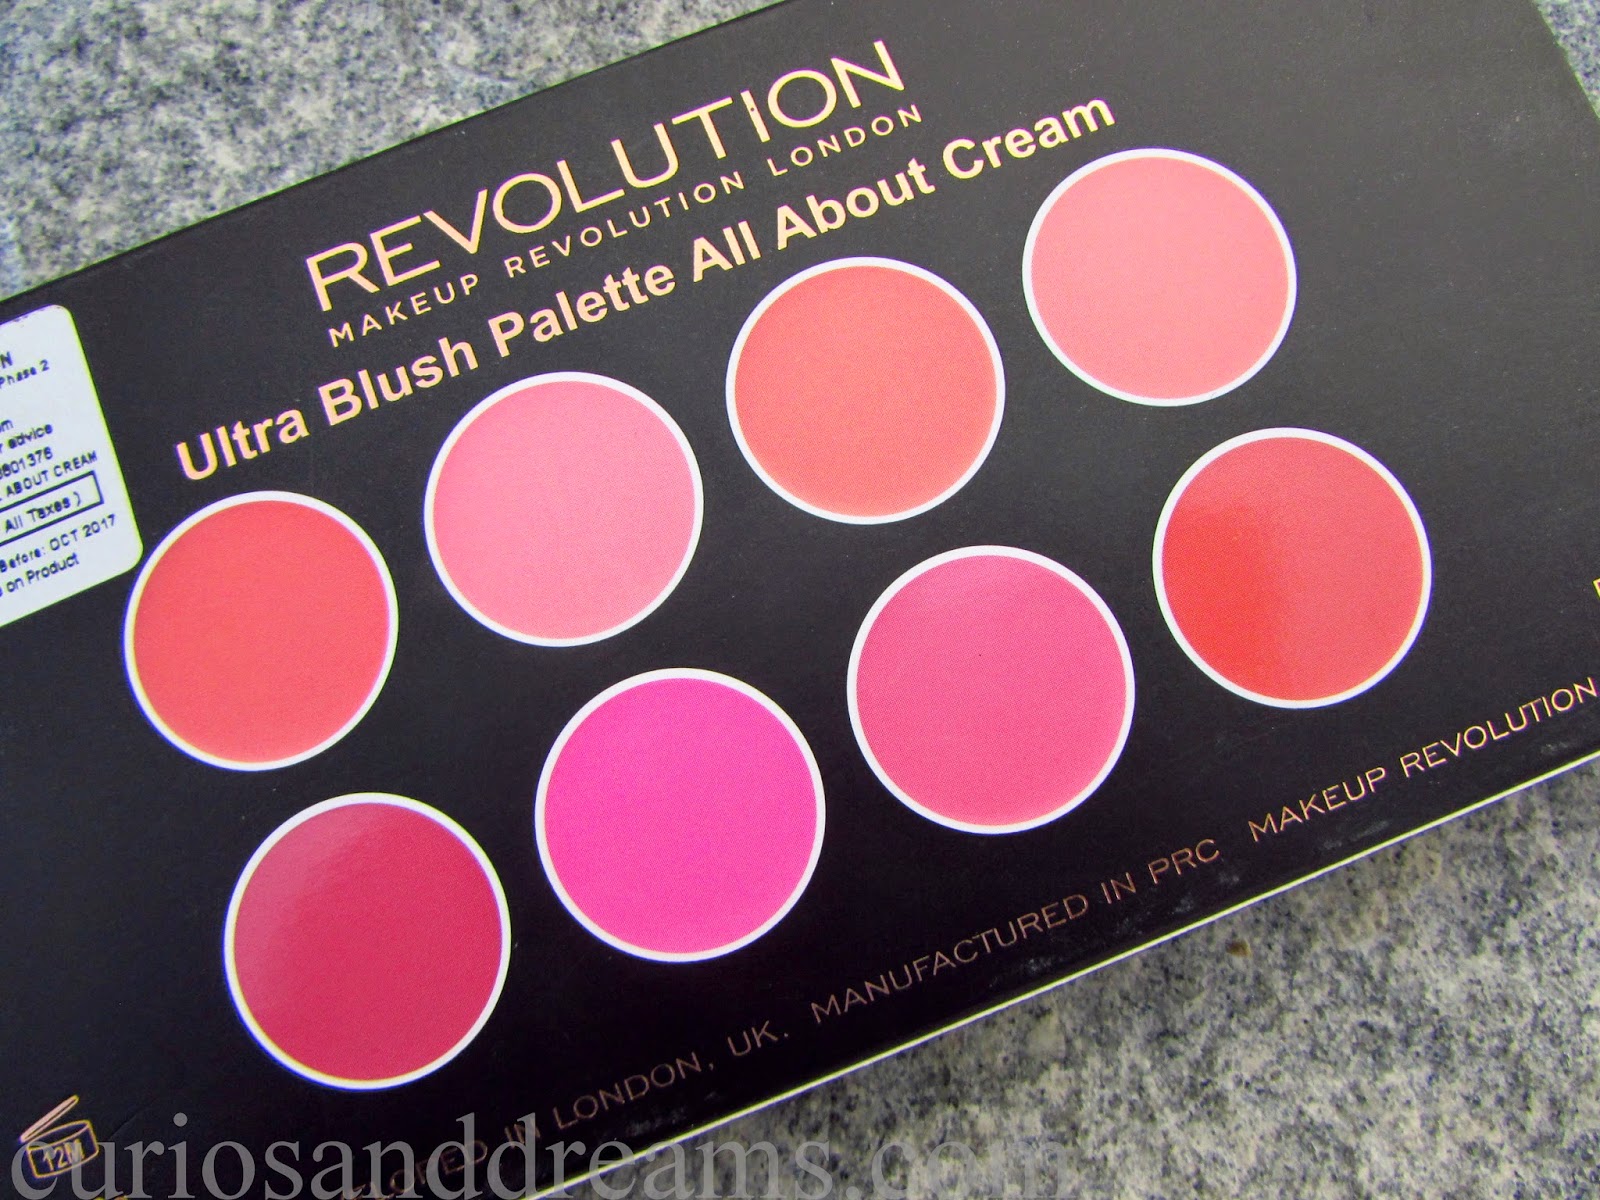 Makeup Revolution London All About Cream Blush Palette review, Makeup Revolution London Cream Blush Palette review